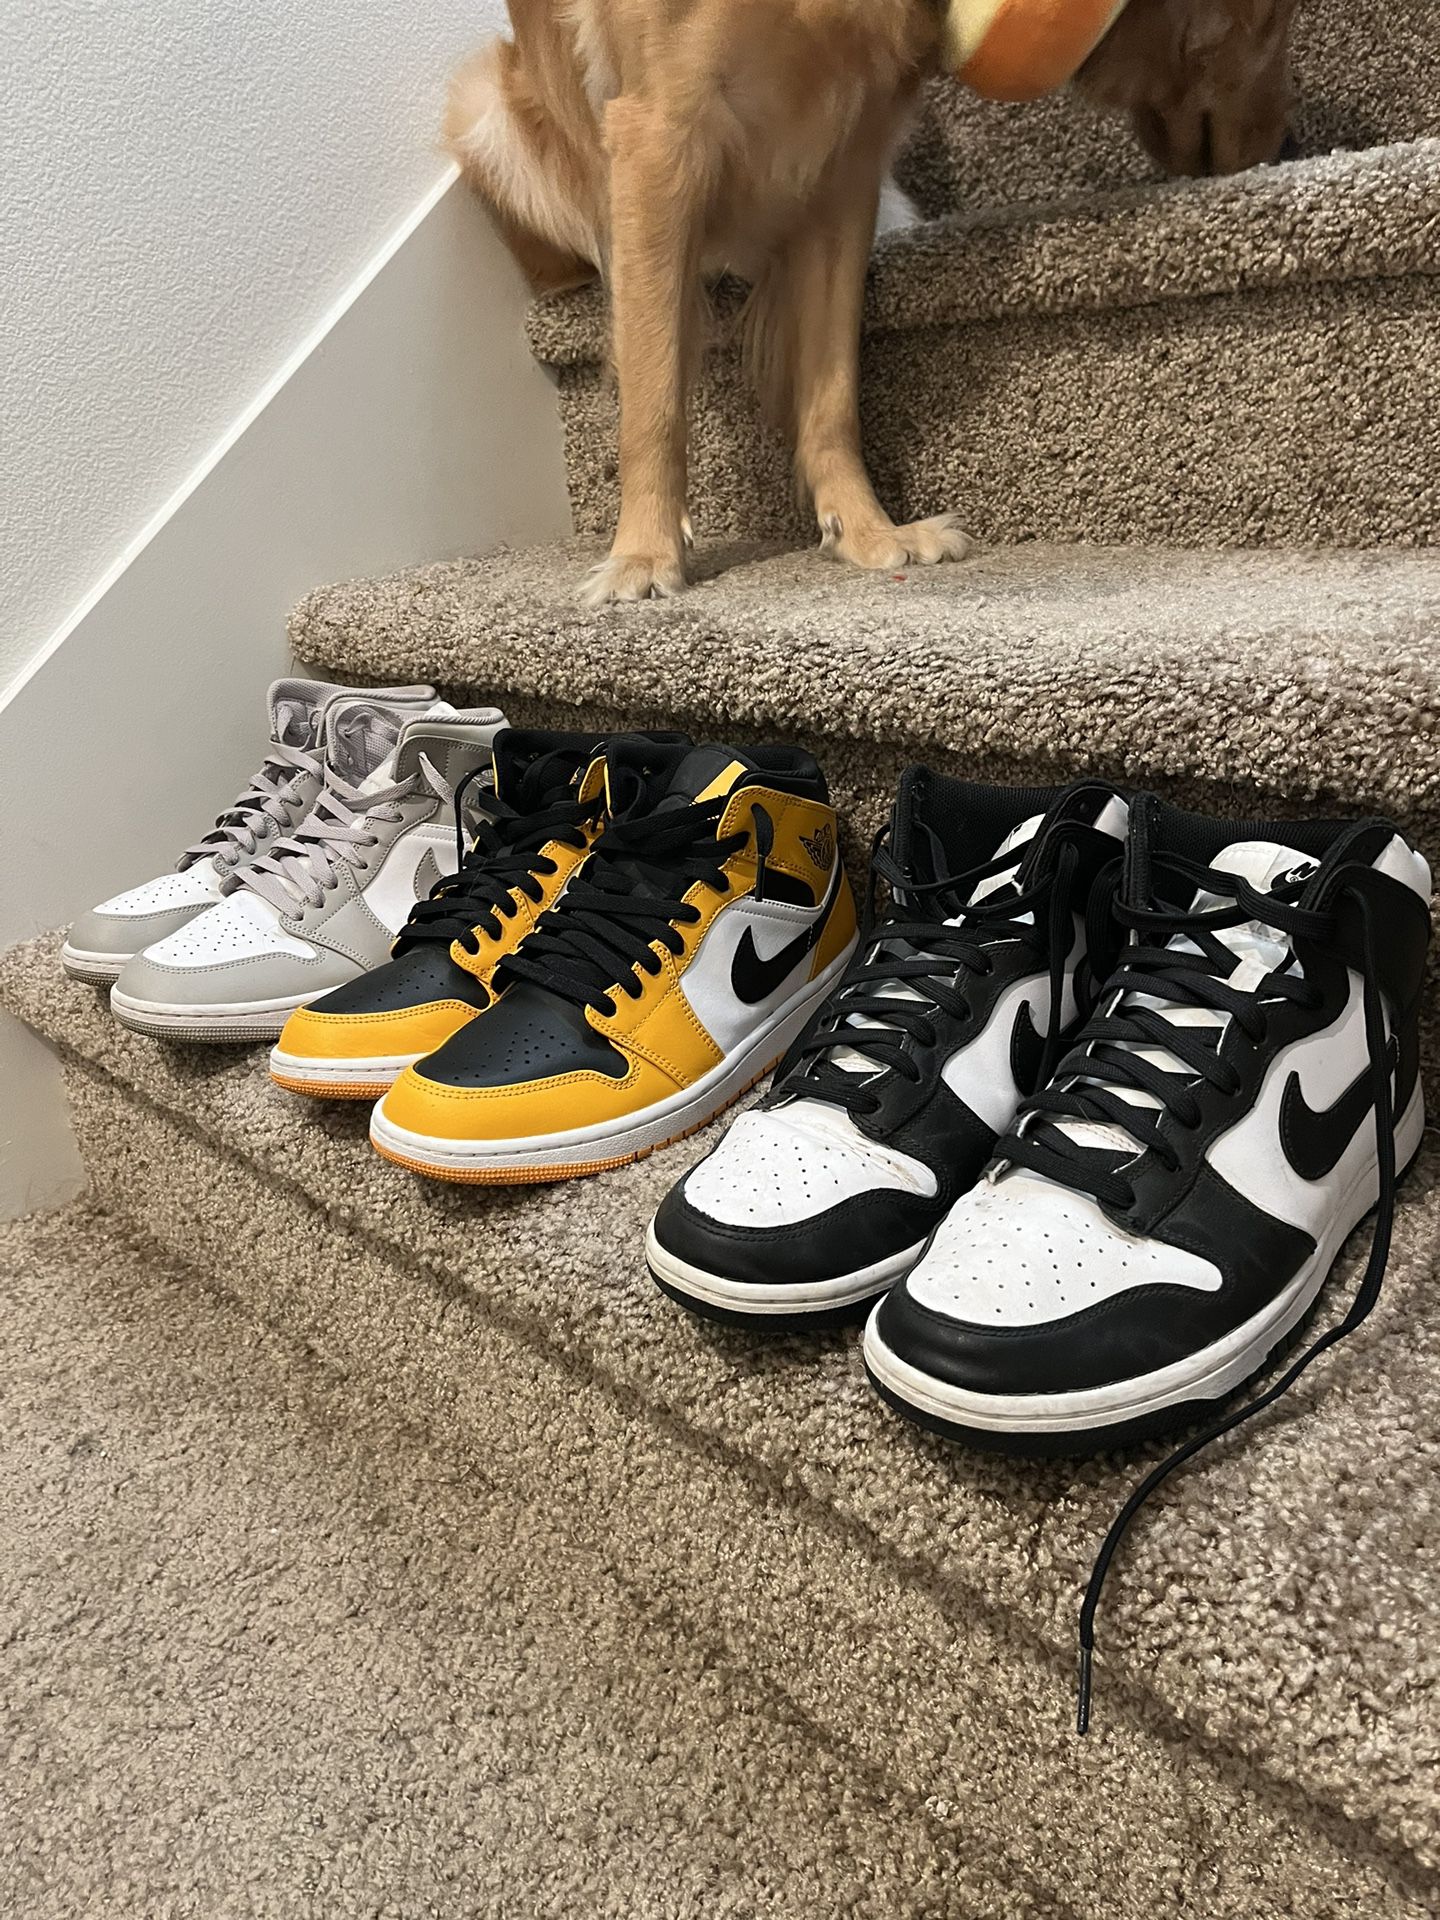 Jordan/Nike Shoes 